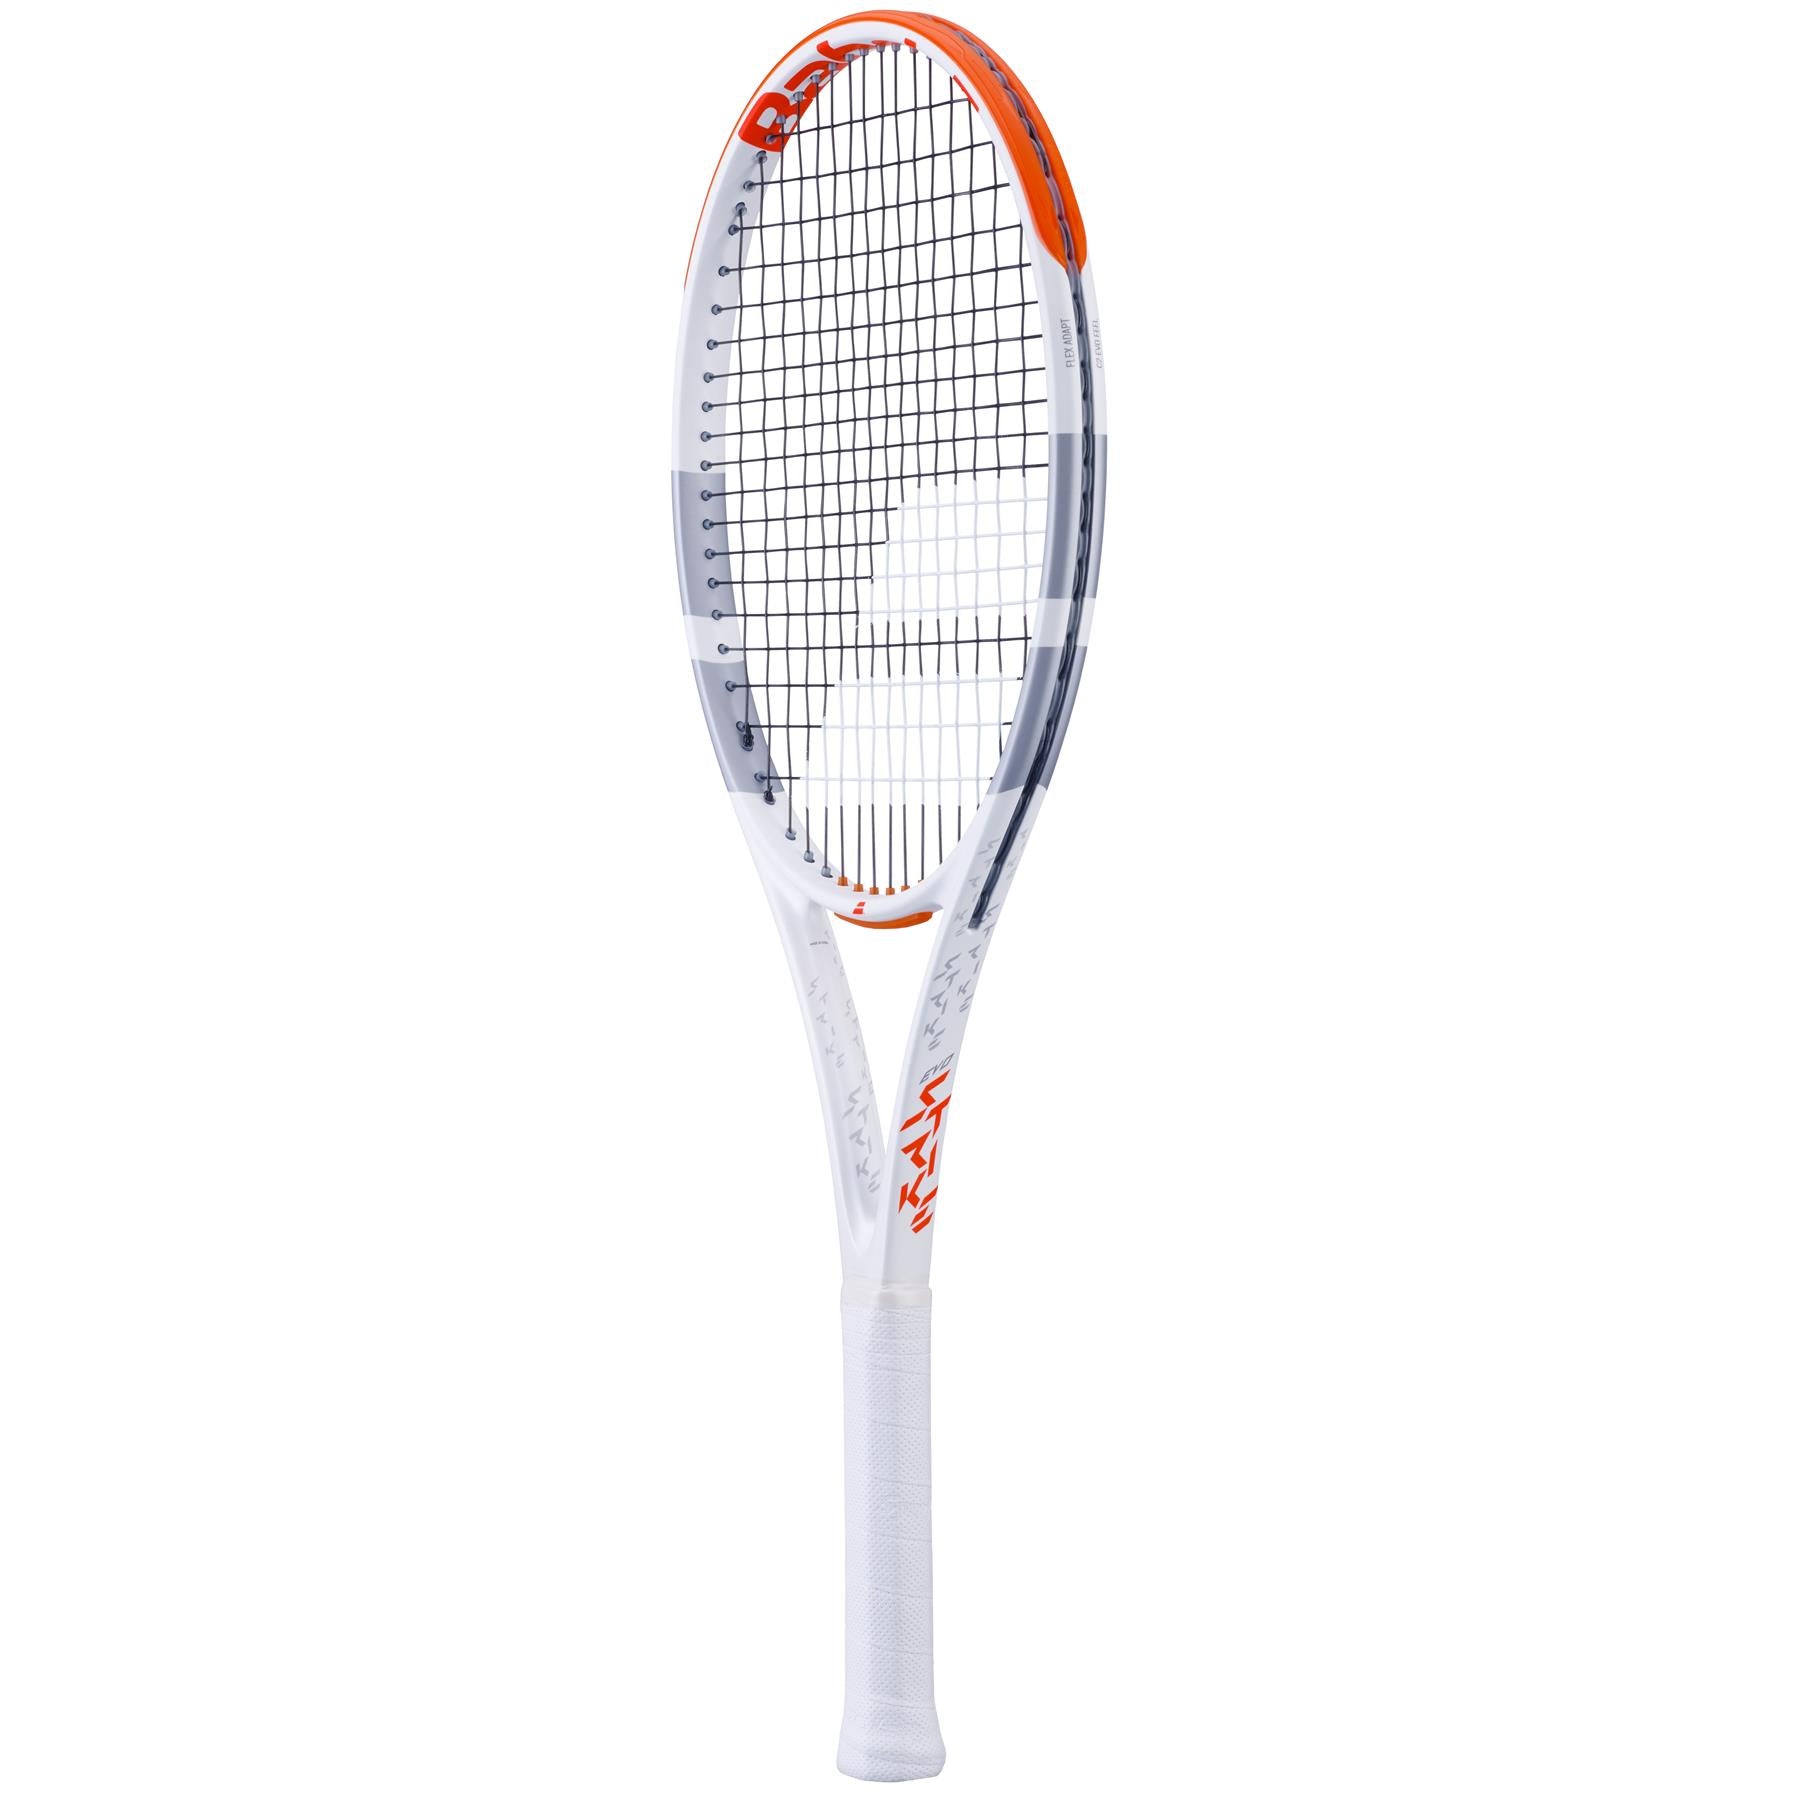 Babolat Evo Strike Gen 2 Tennis Racket - White / Red / Grey (Strung) - Side